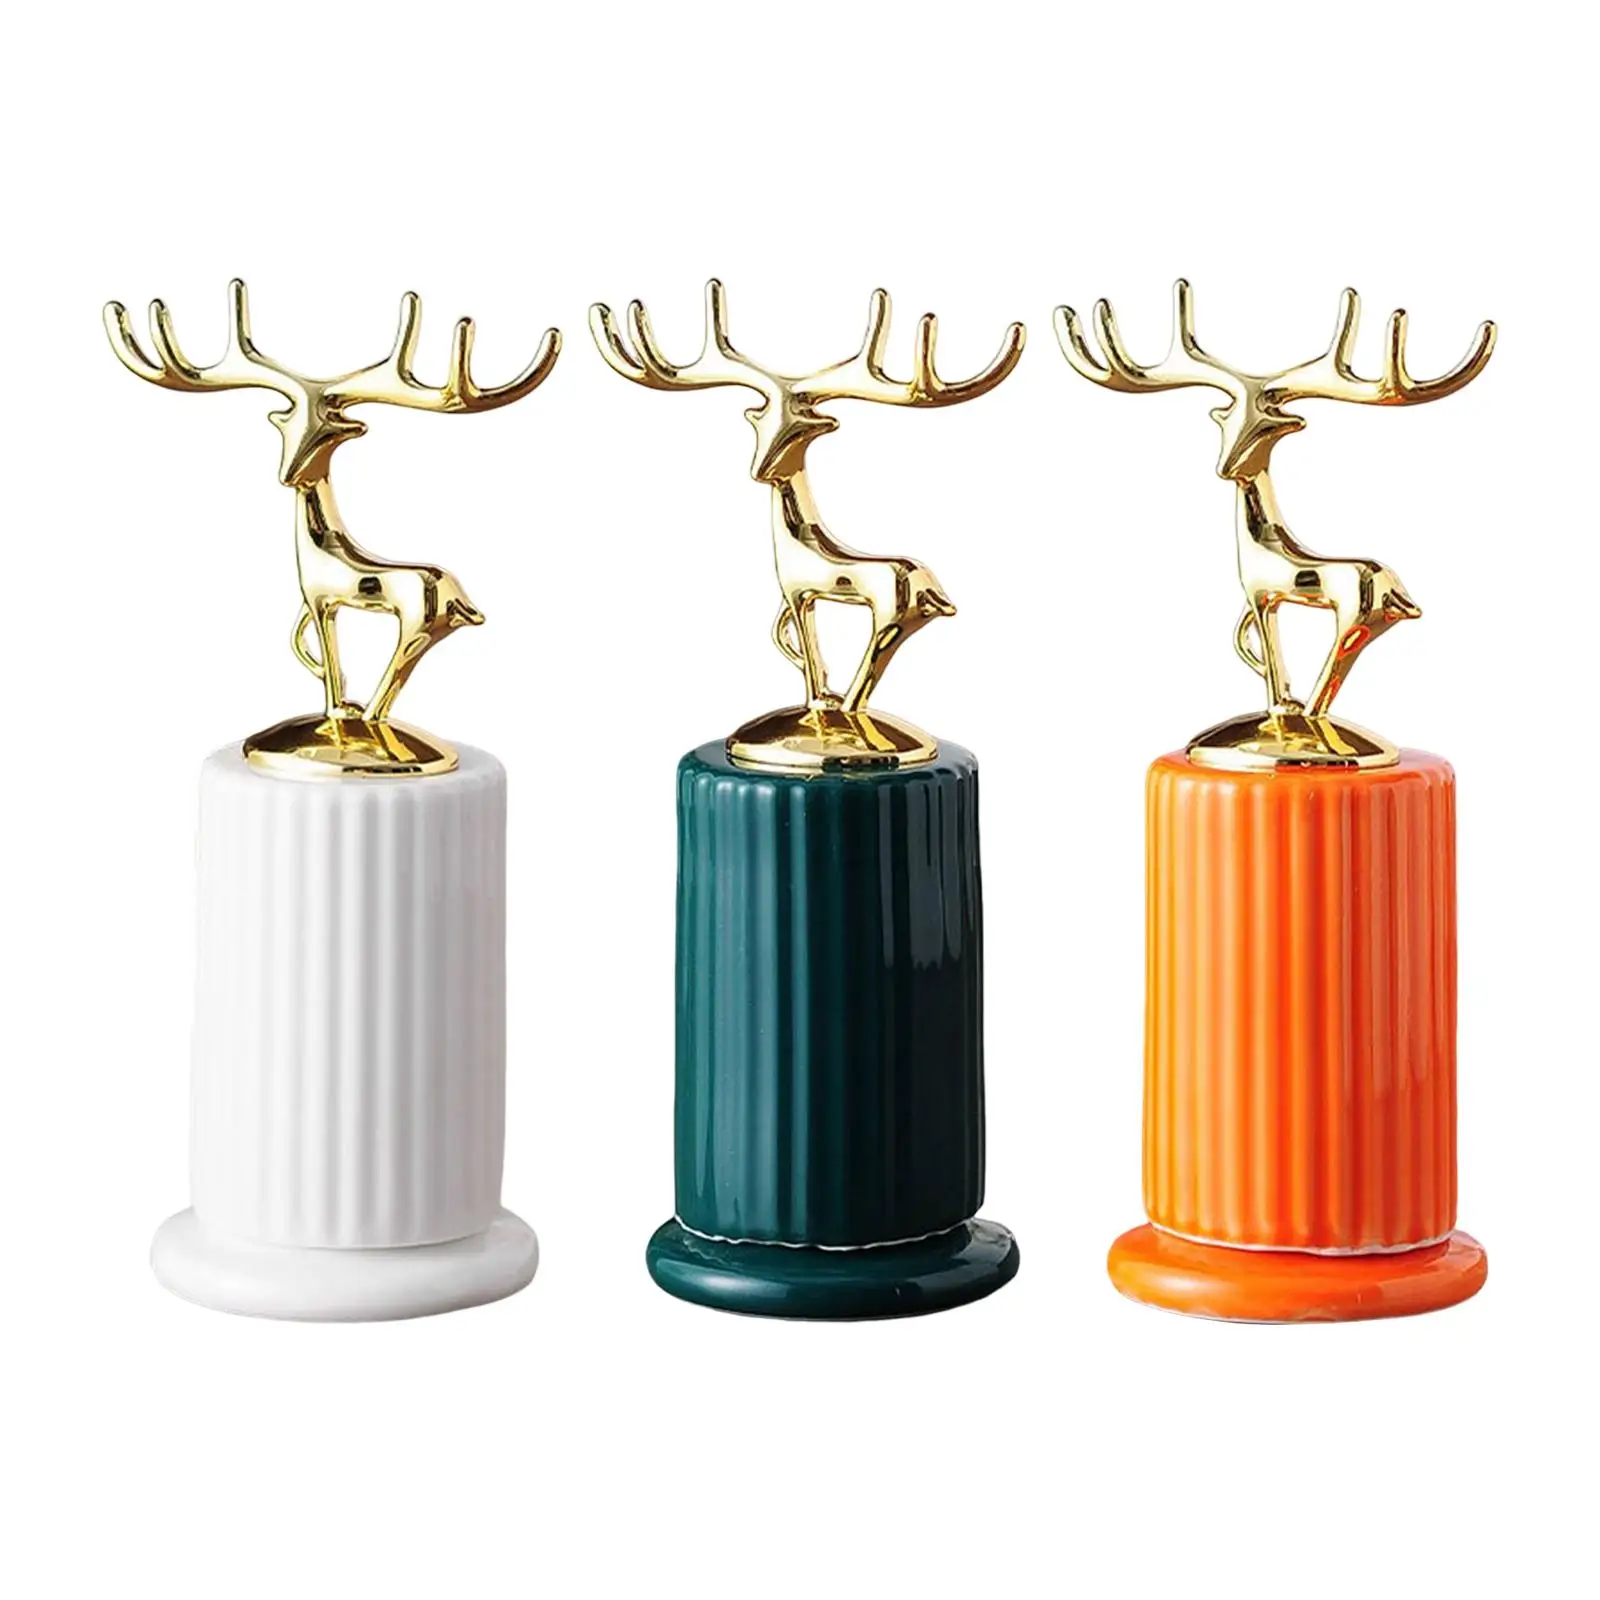 Toothpick Holder Storage Container Deer Figures for Living Room Kitchen Cafe